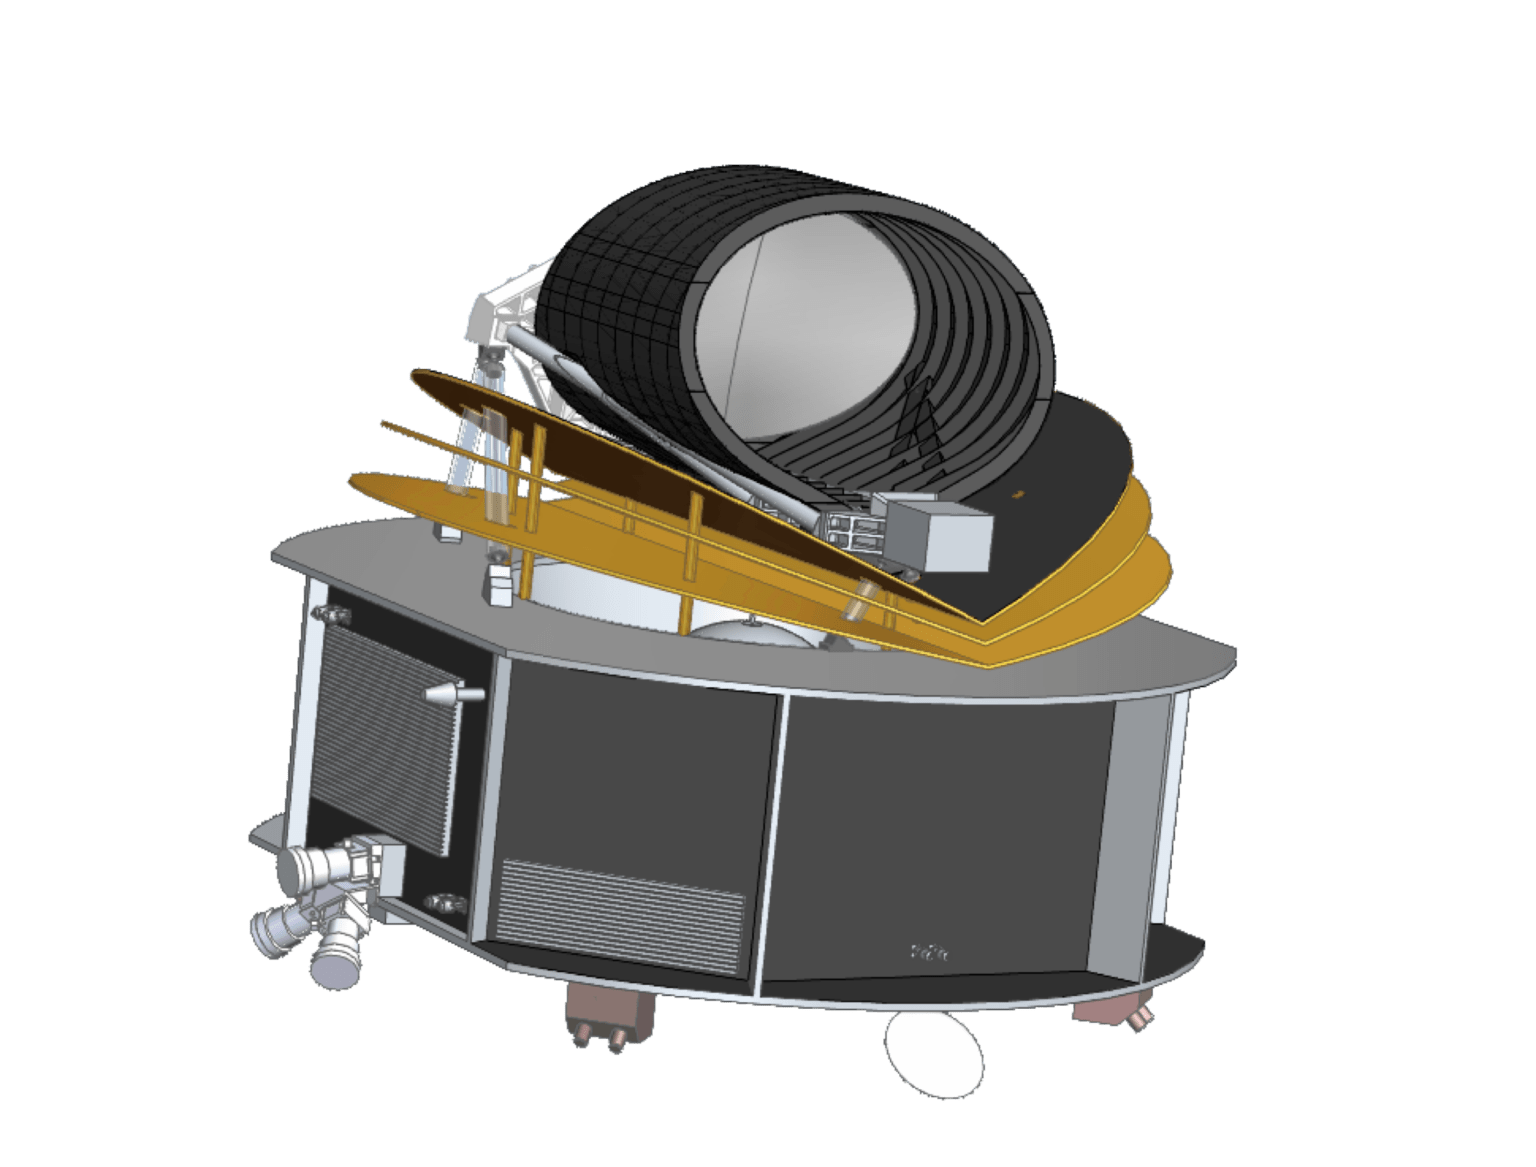 a diagram of the ARIEL satellite